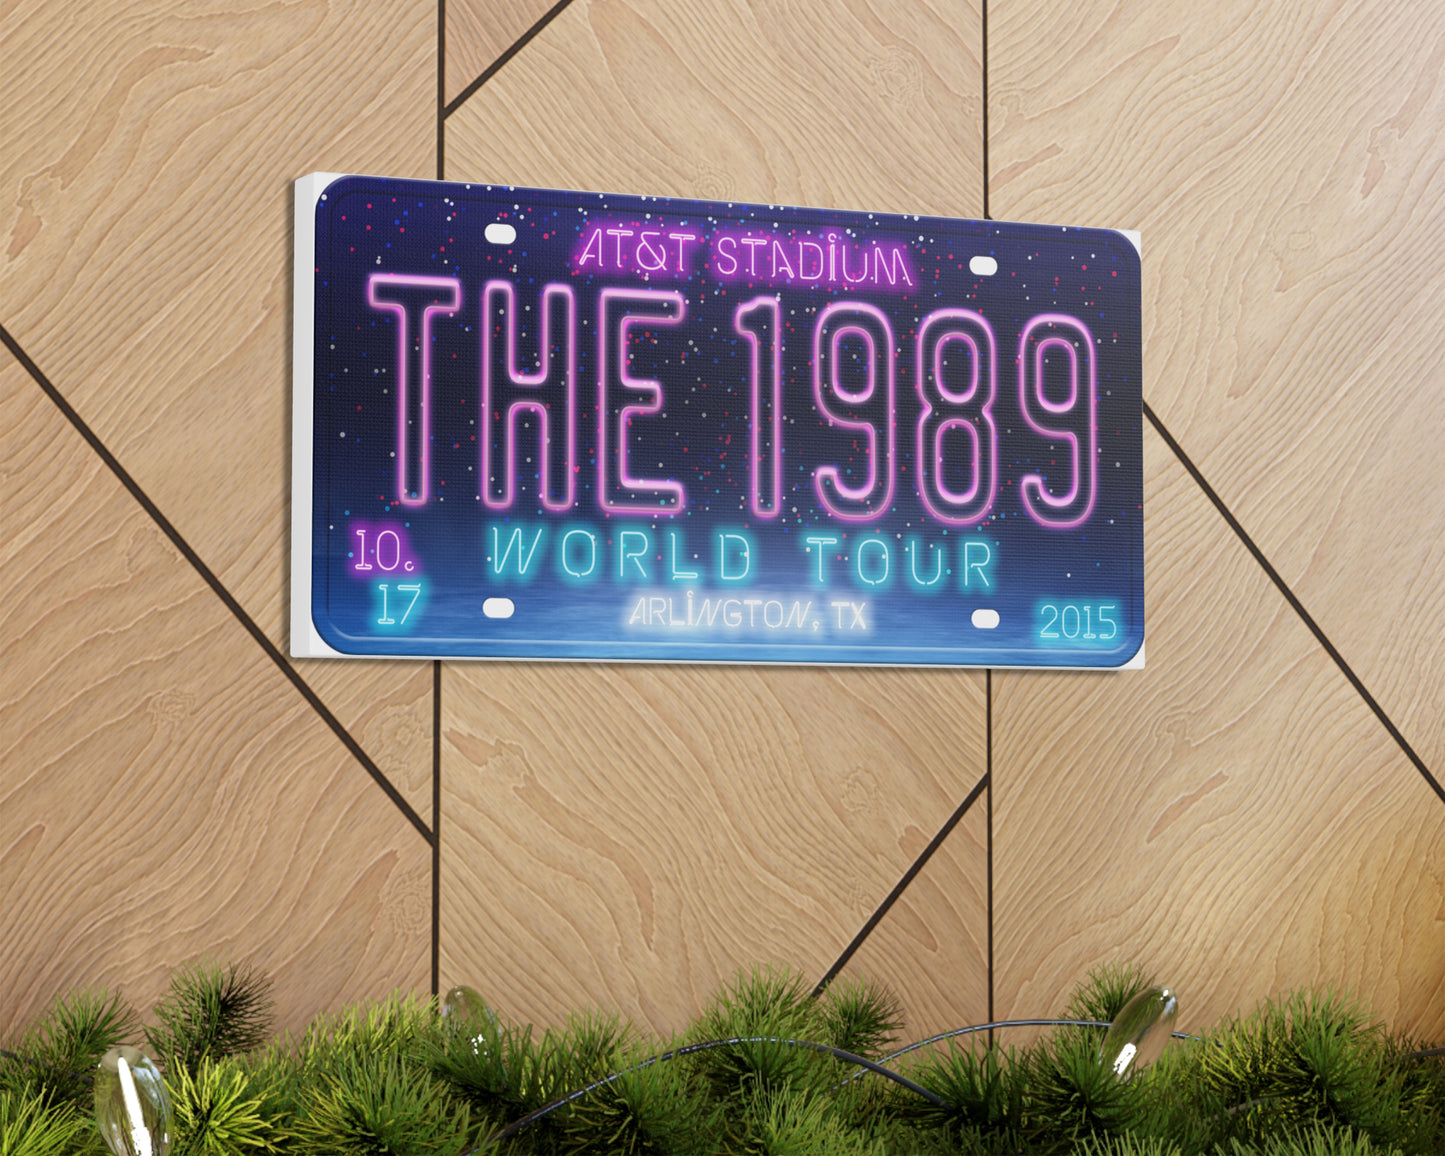 The 1989 World Tour canvas wall decor